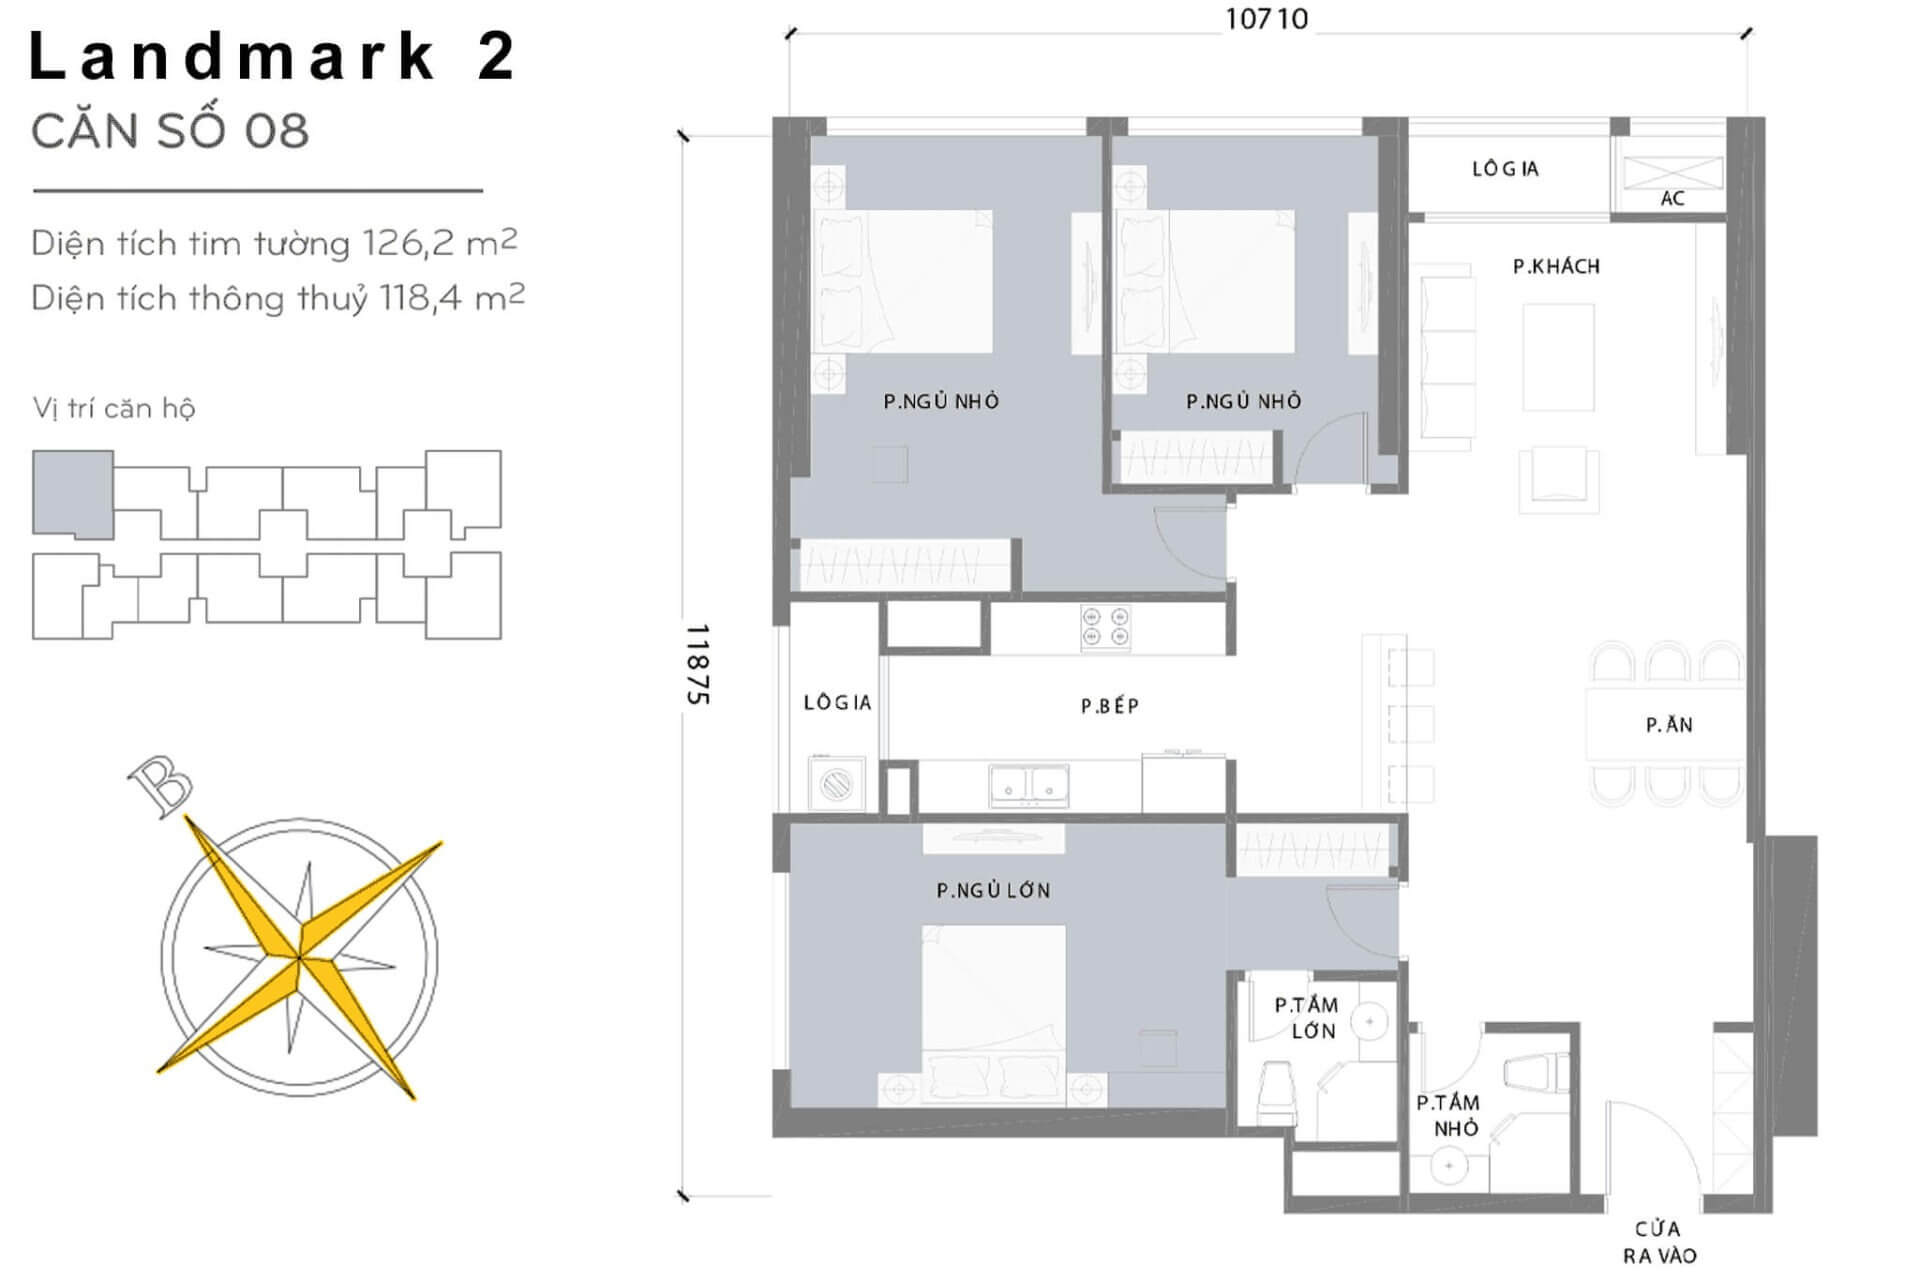 layout căn hộ số 8 Landmark 2 L2-08